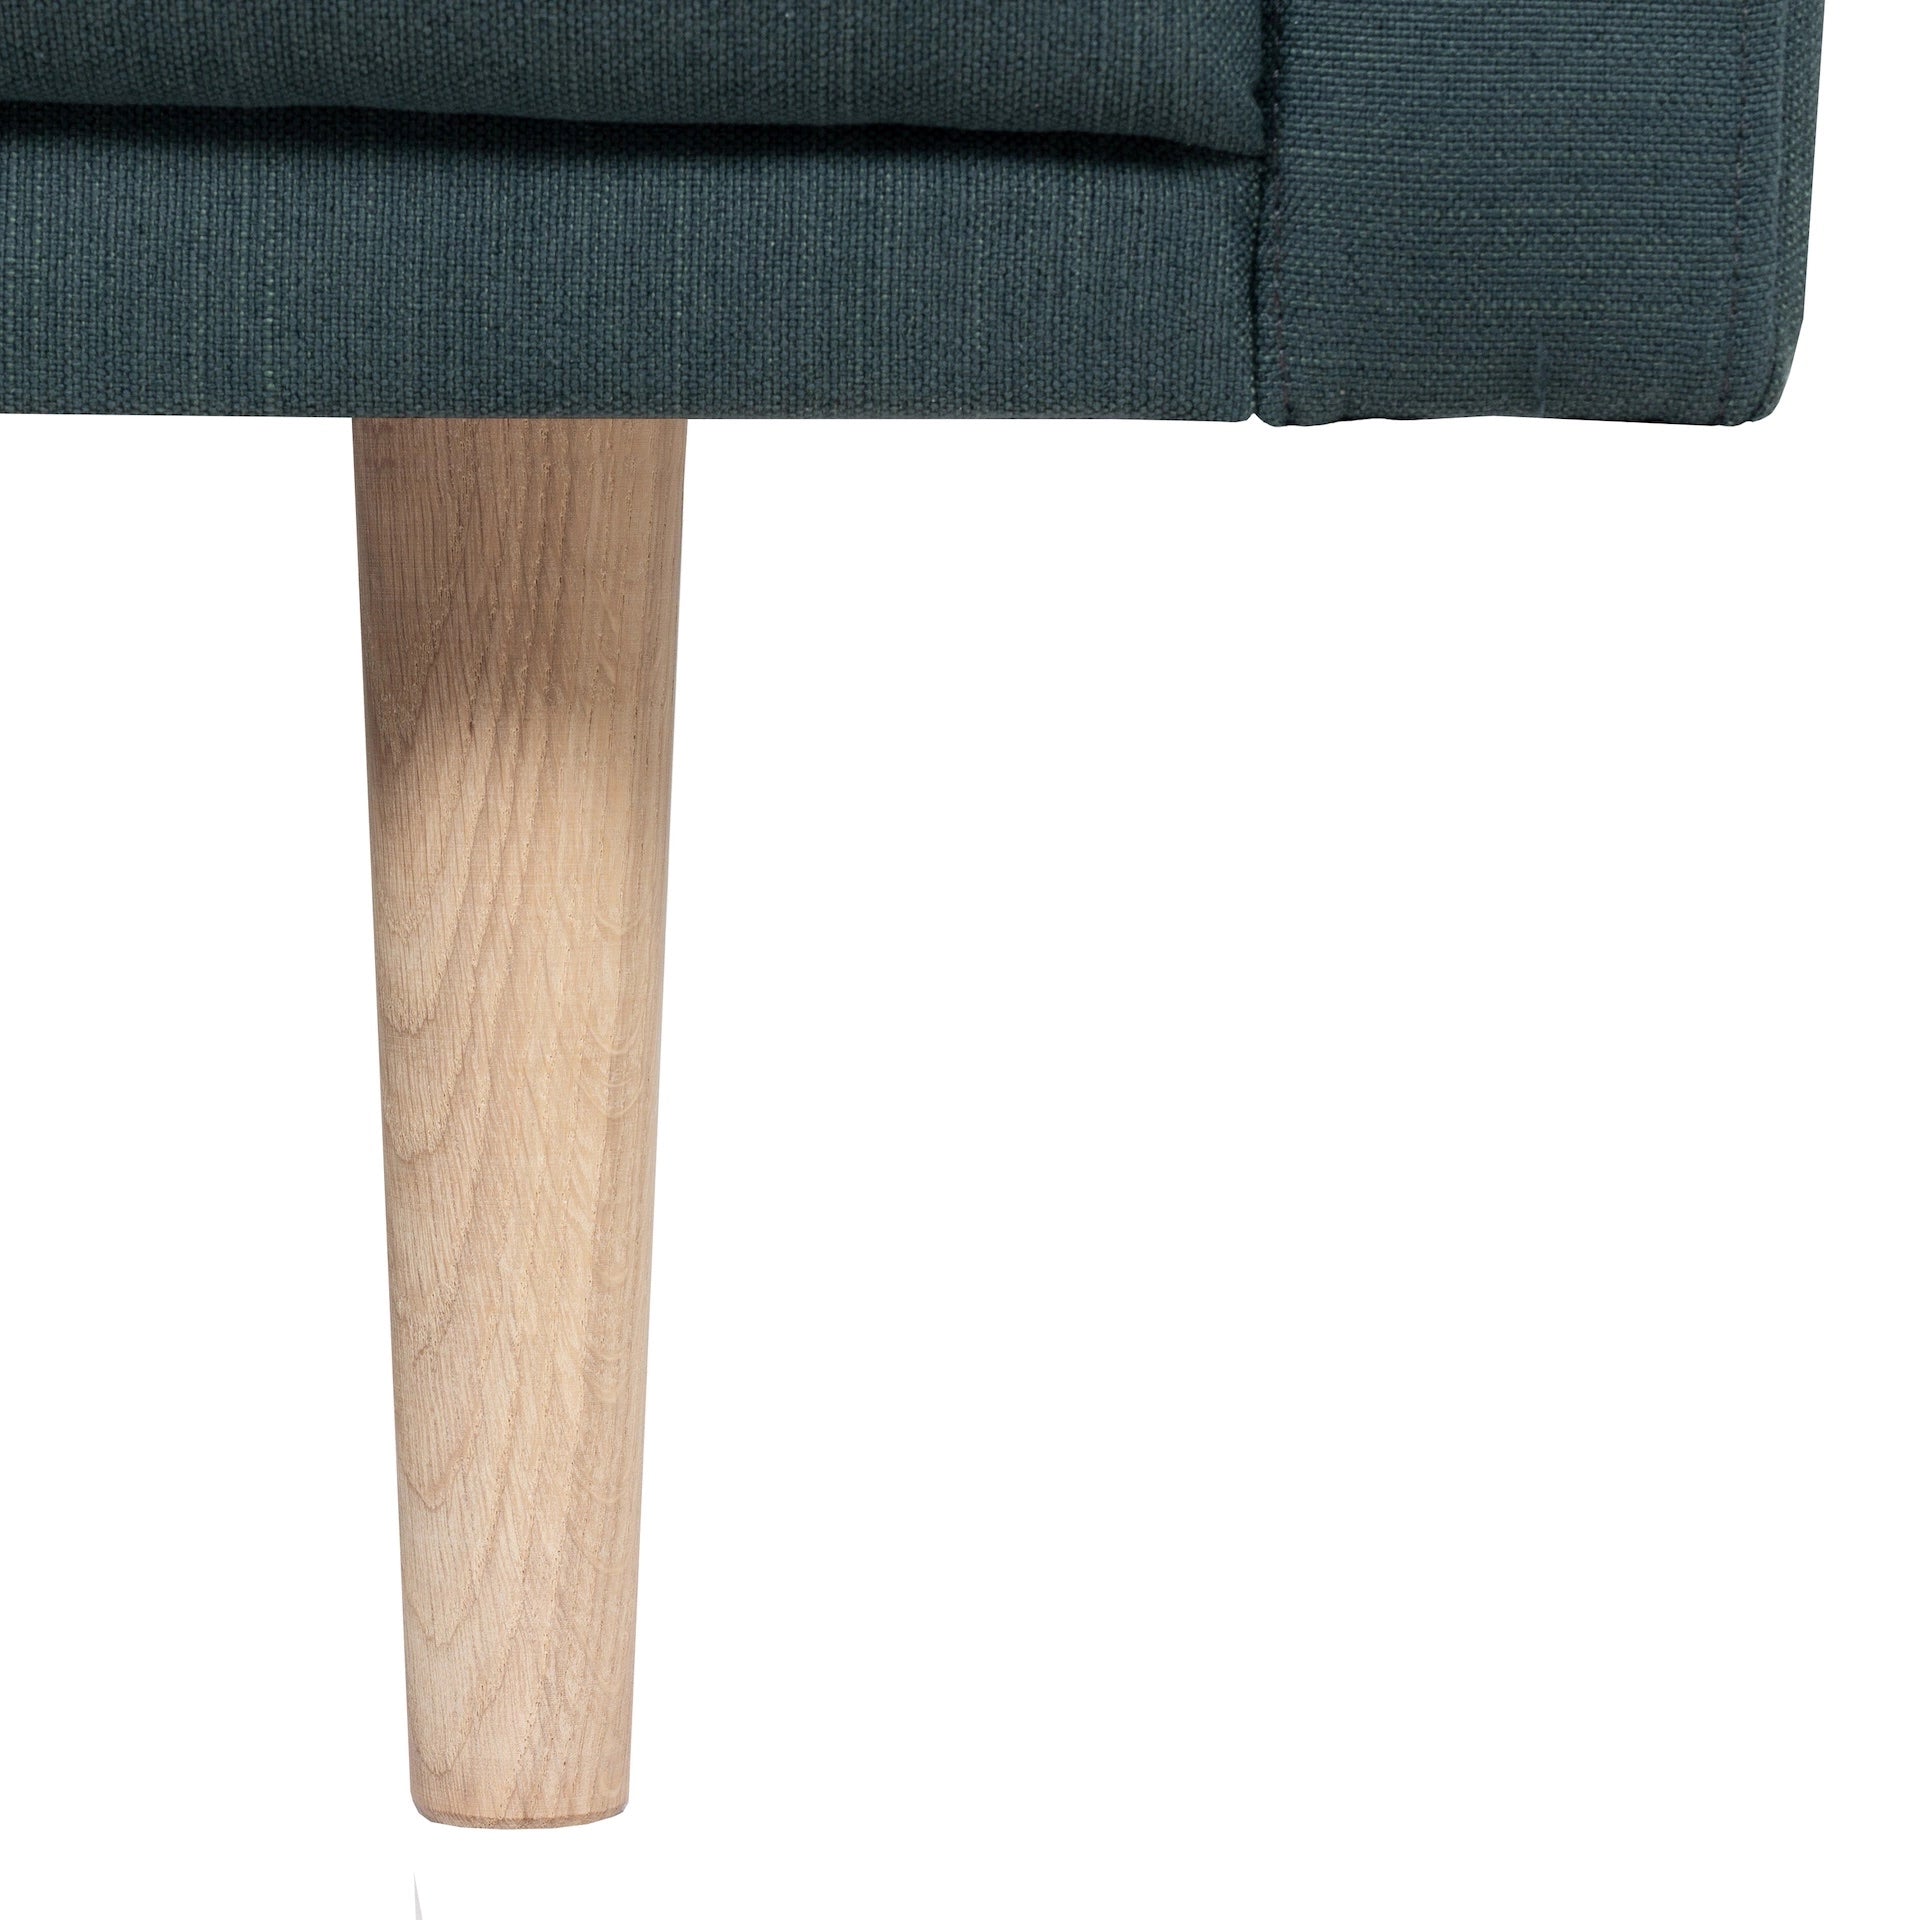 Furniture To Go Larvik Chaiselongue Sofa (LH) - Dark Green, Oak Legs